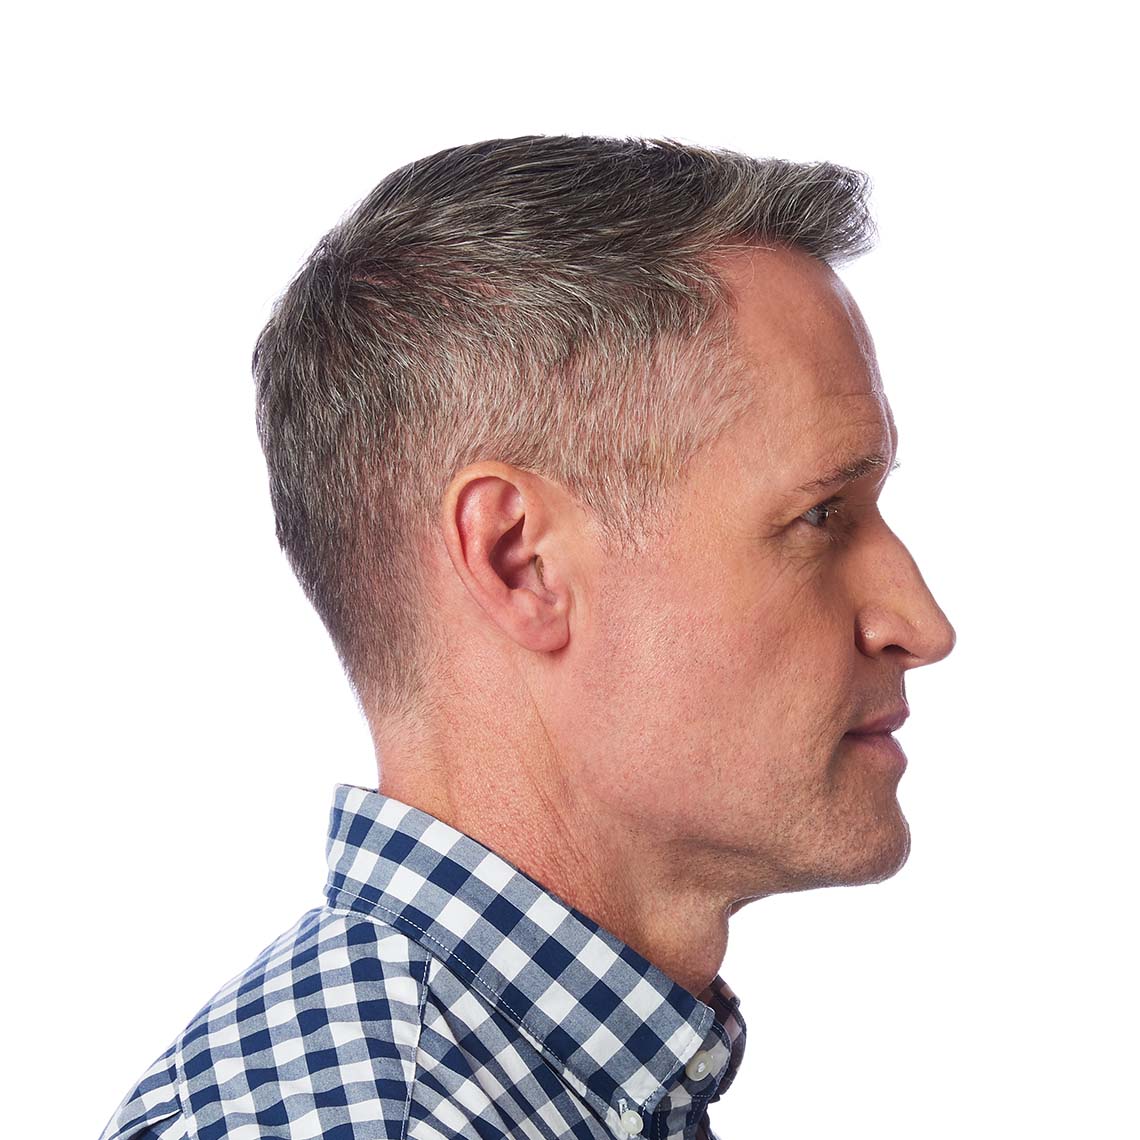 A CIC hearing aid shown in a man's ear